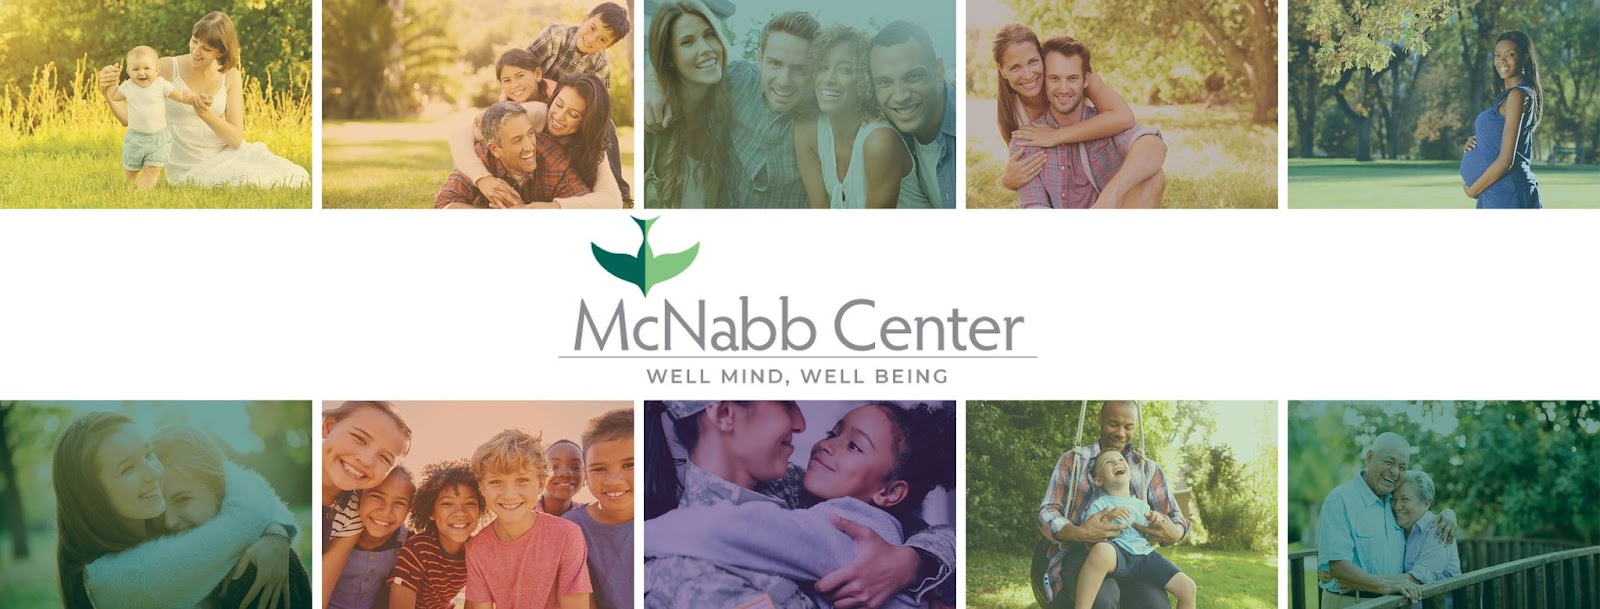 McNabb Center - CenterPointe